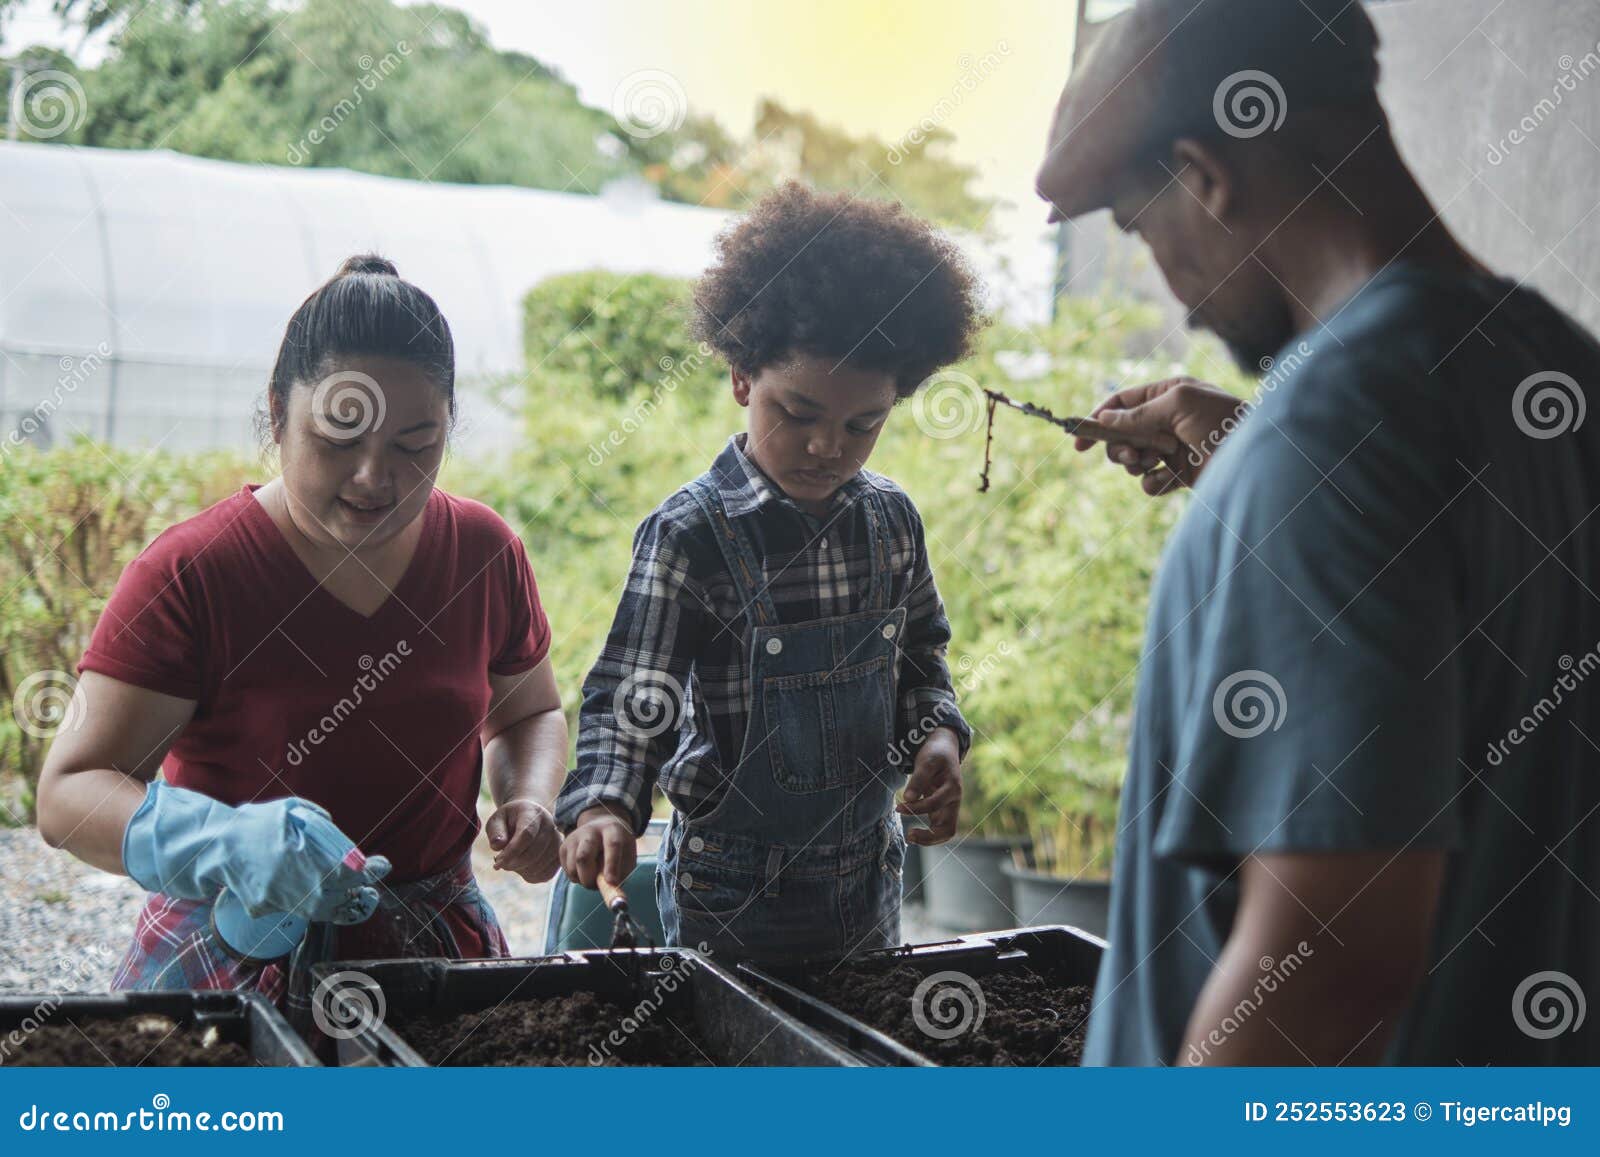 a black farmer family prepares bio-fertilizer together by earthworm in the soil